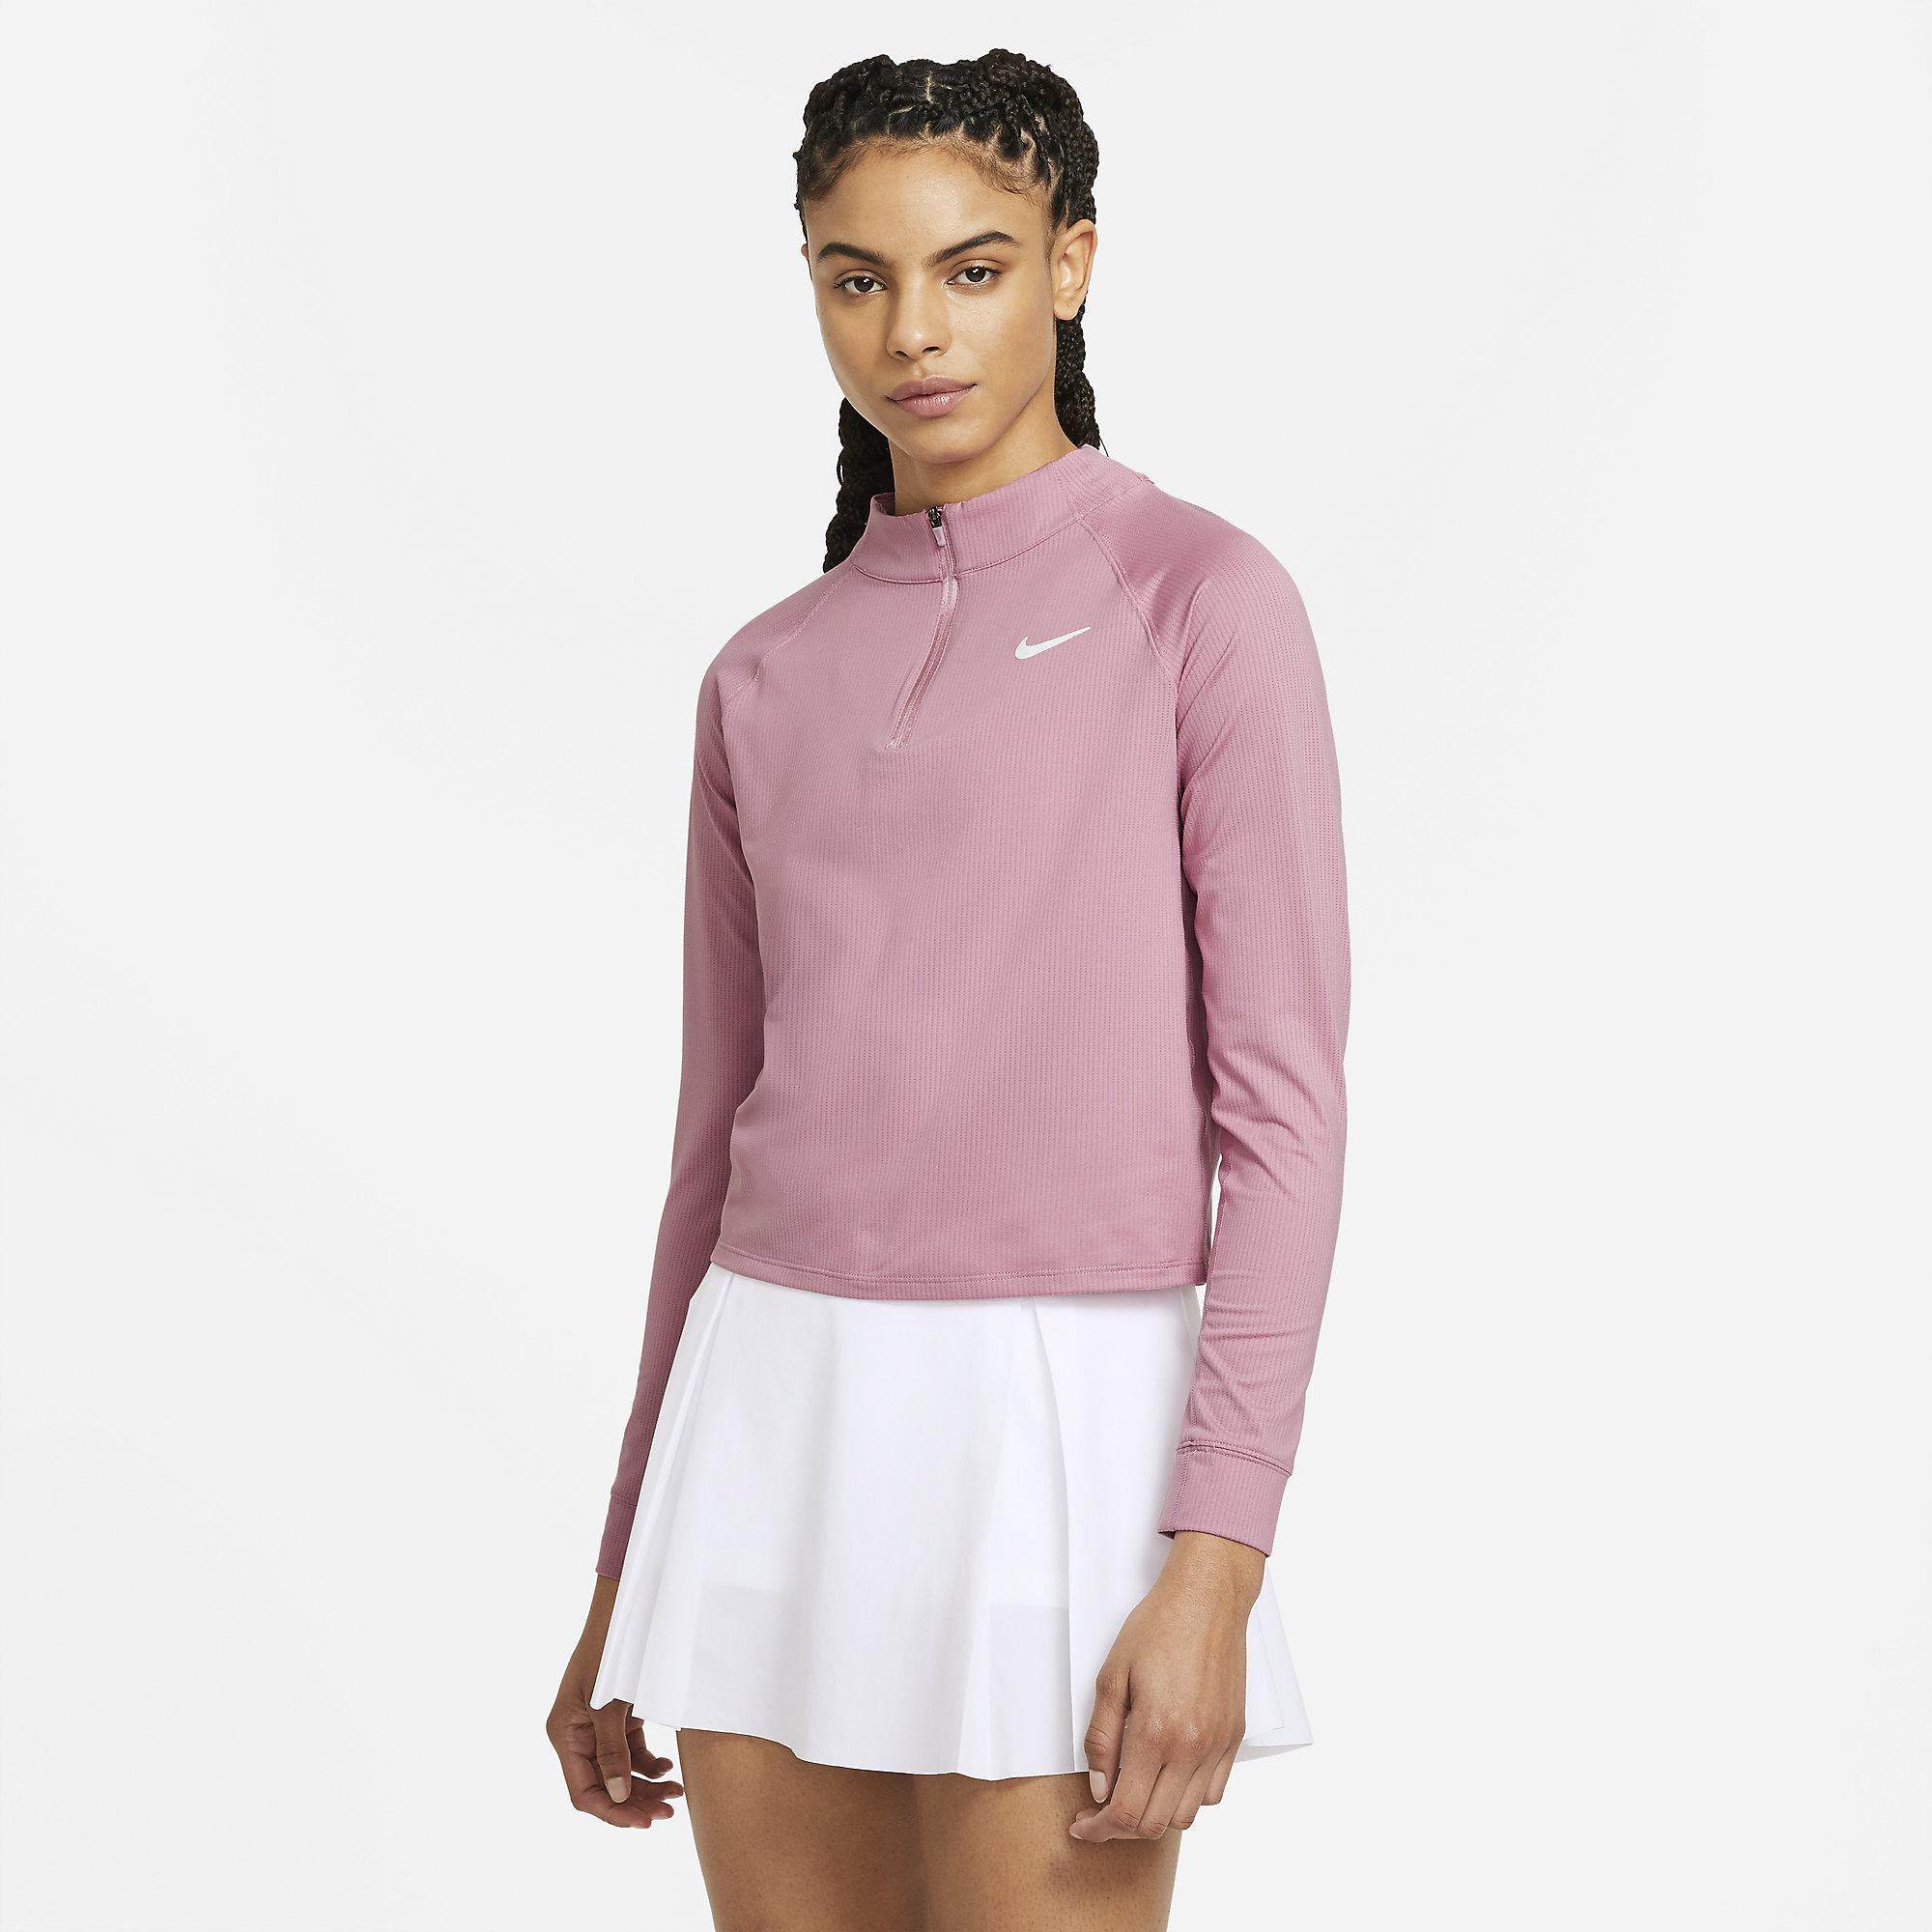 Nike Womens Victory Half Zip Tennis Top - Elemental Pink - Tennisnuts.com